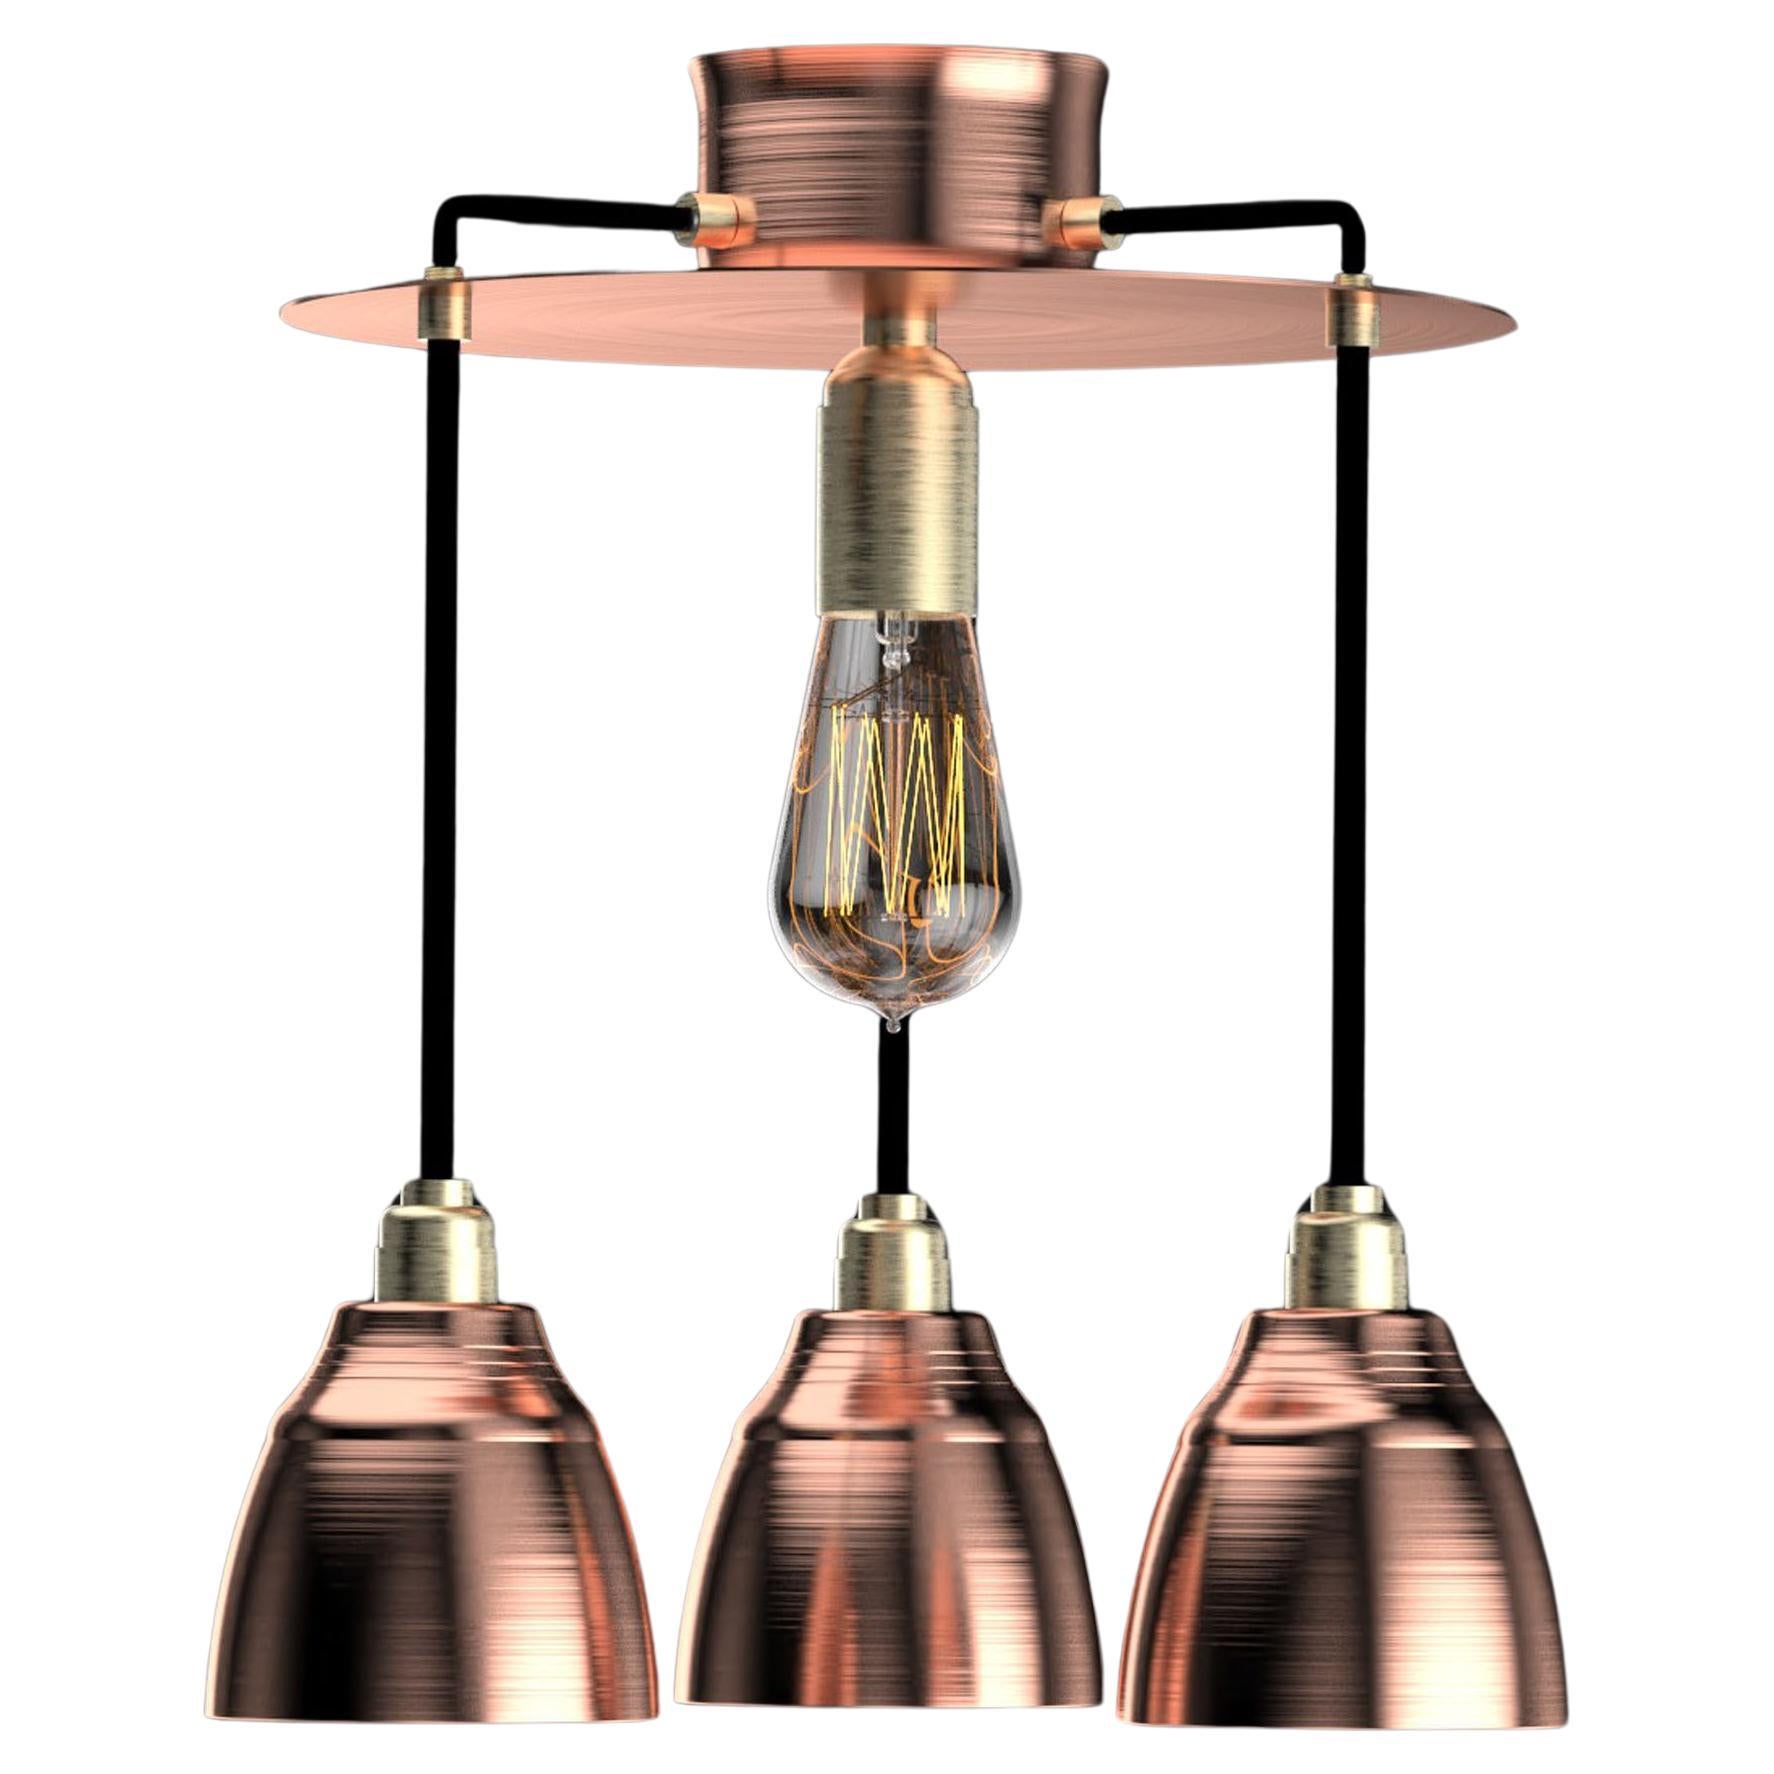 Edimate Genuine Copper Ceiling Light, Handmade in France Version 4 For Sale